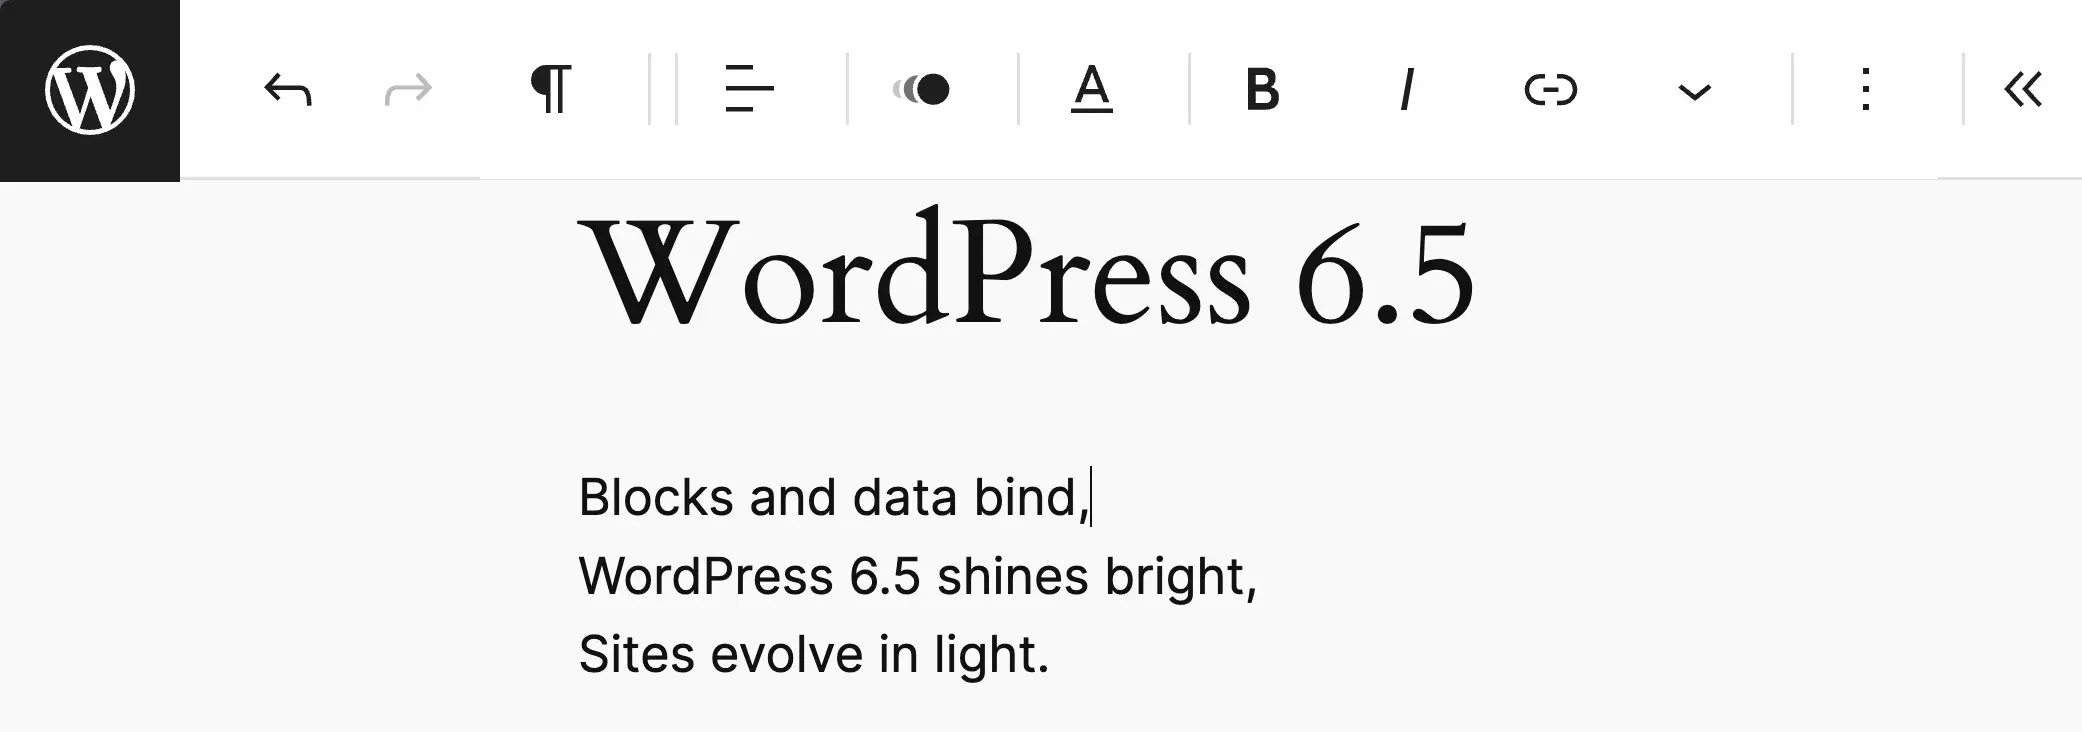 WordPress 6.5 の気晴らしモードが有効になり、上部のツールバーが表示されます。